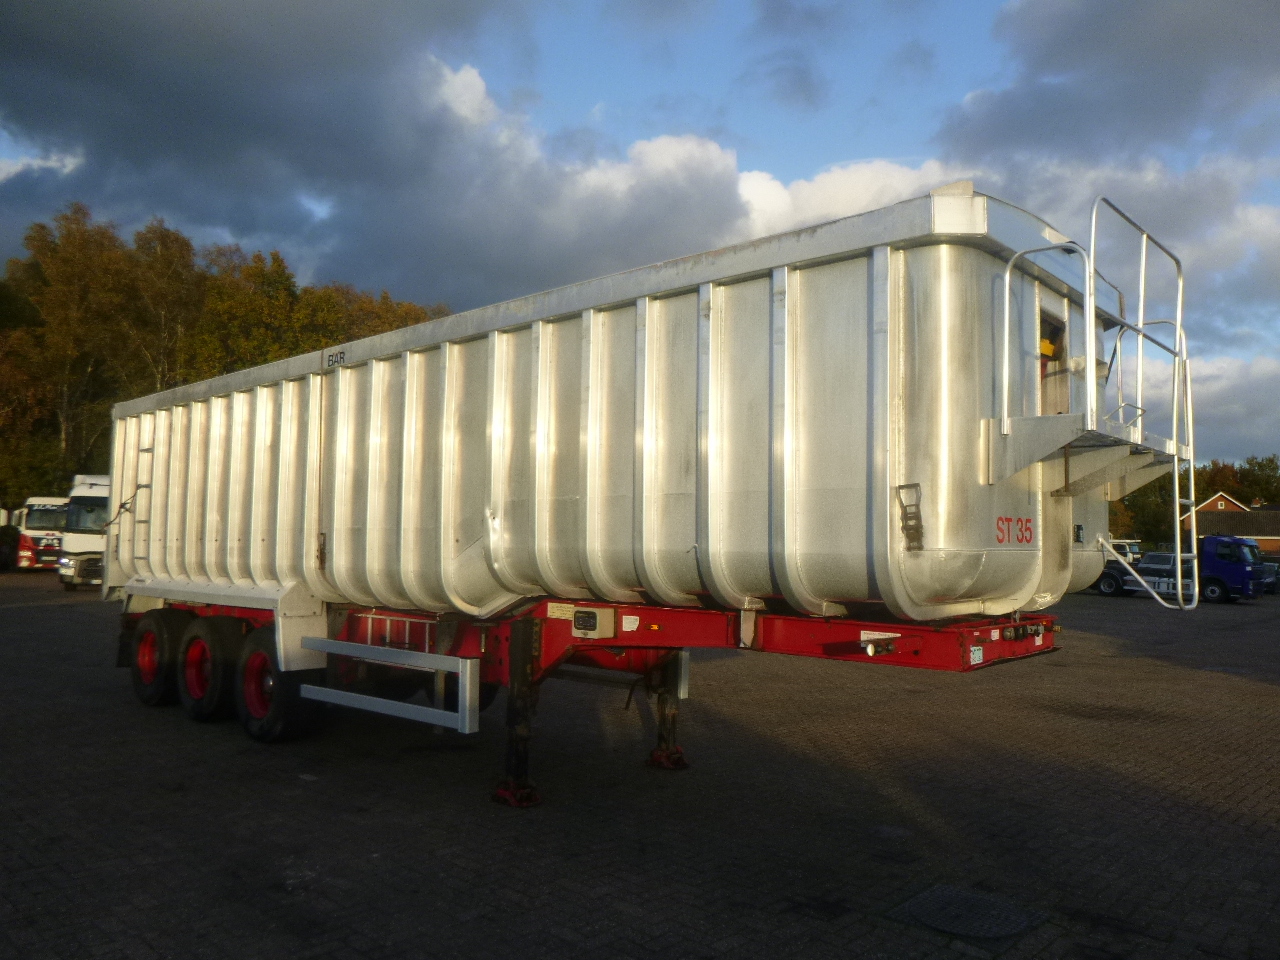 Tippbil semitrailer Montracon Tipper trailer alu 53.6 m3 + tarpaulin: bild 2